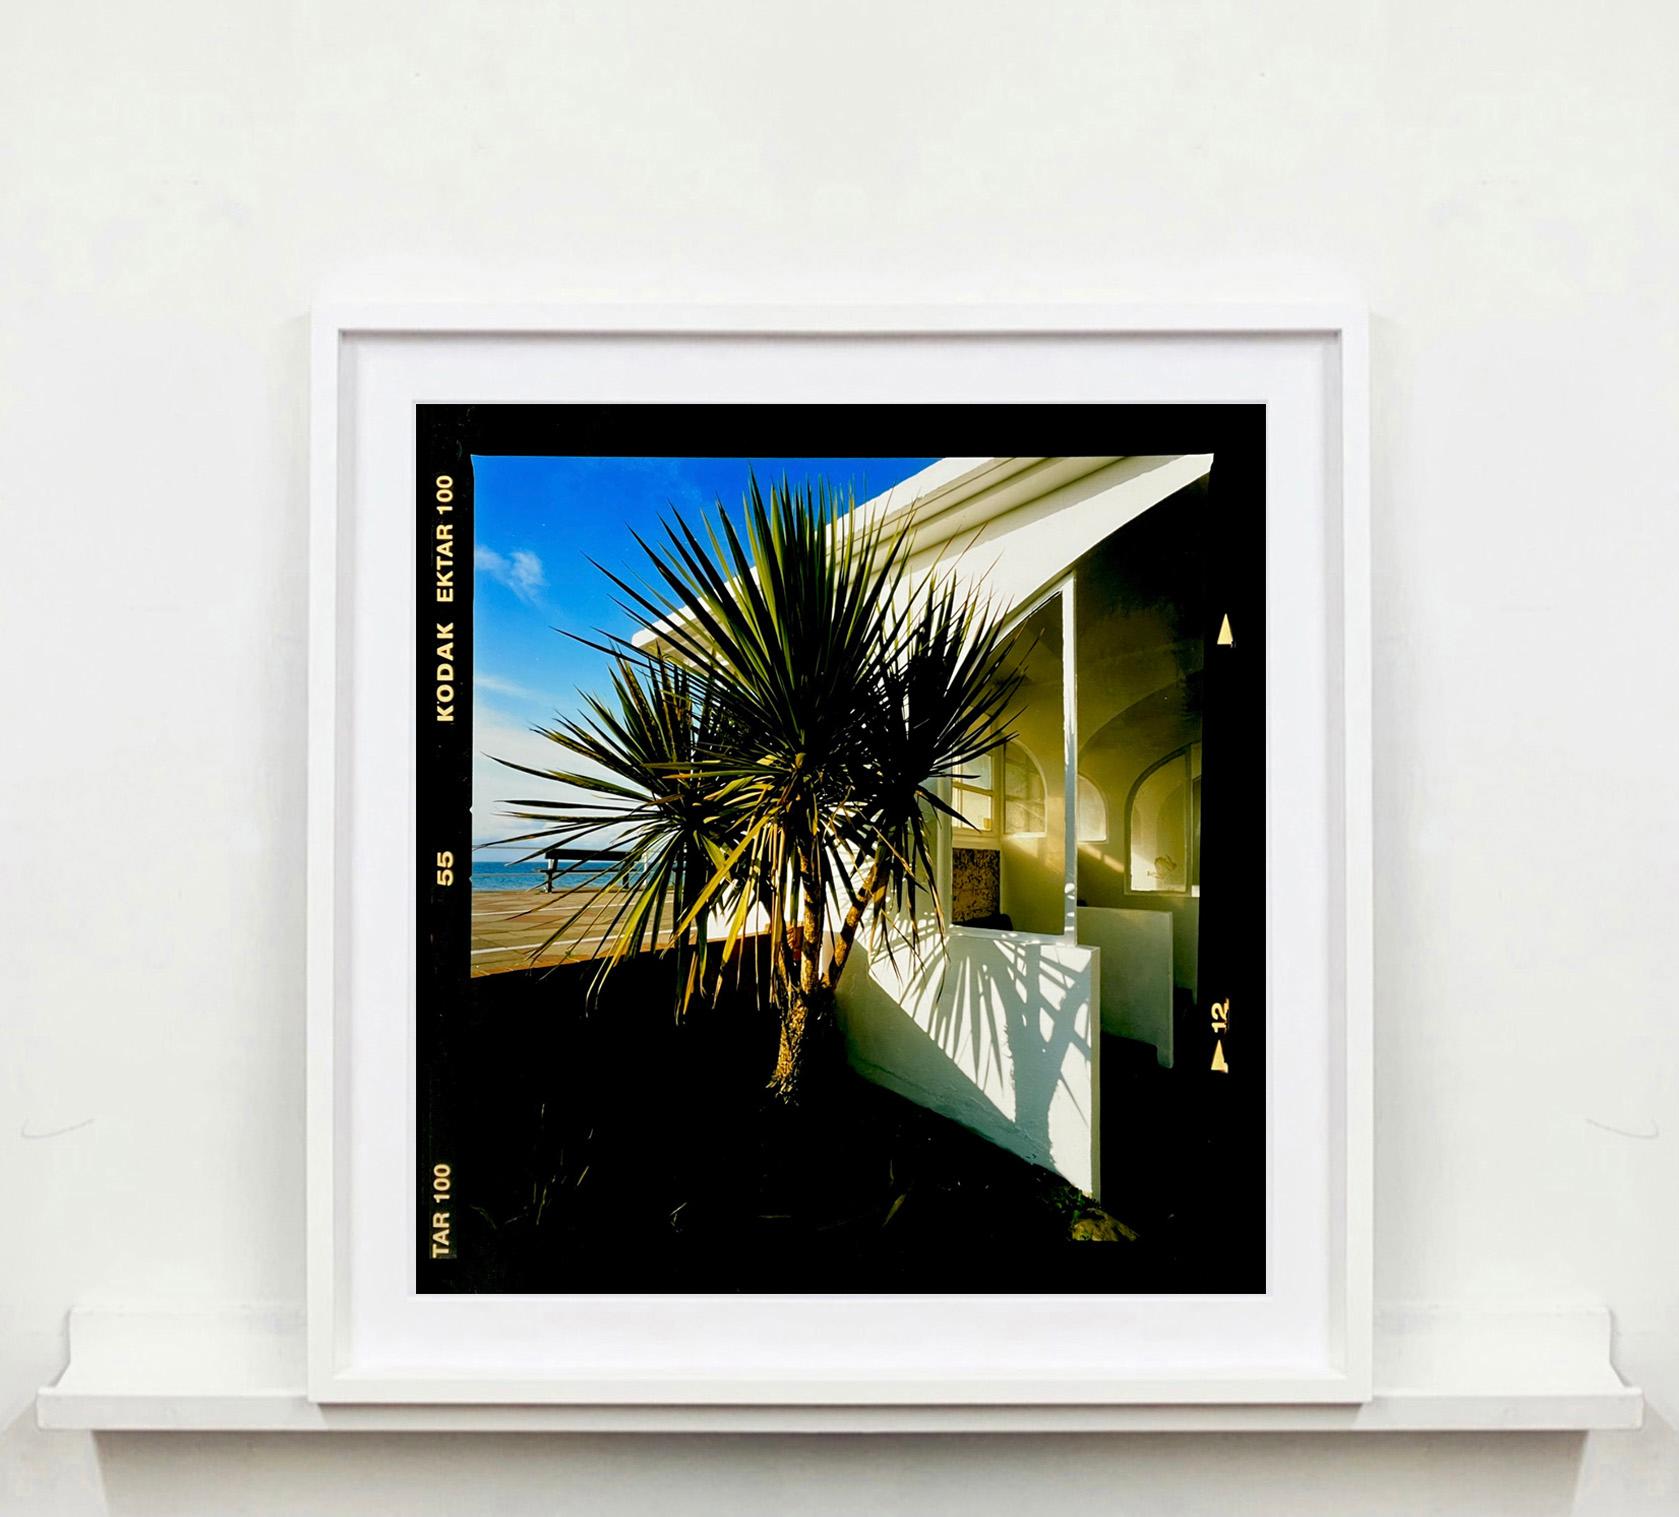 Palms, St Leonard's-on-Sea - British Color Photography - Black Print by Richard Heeps